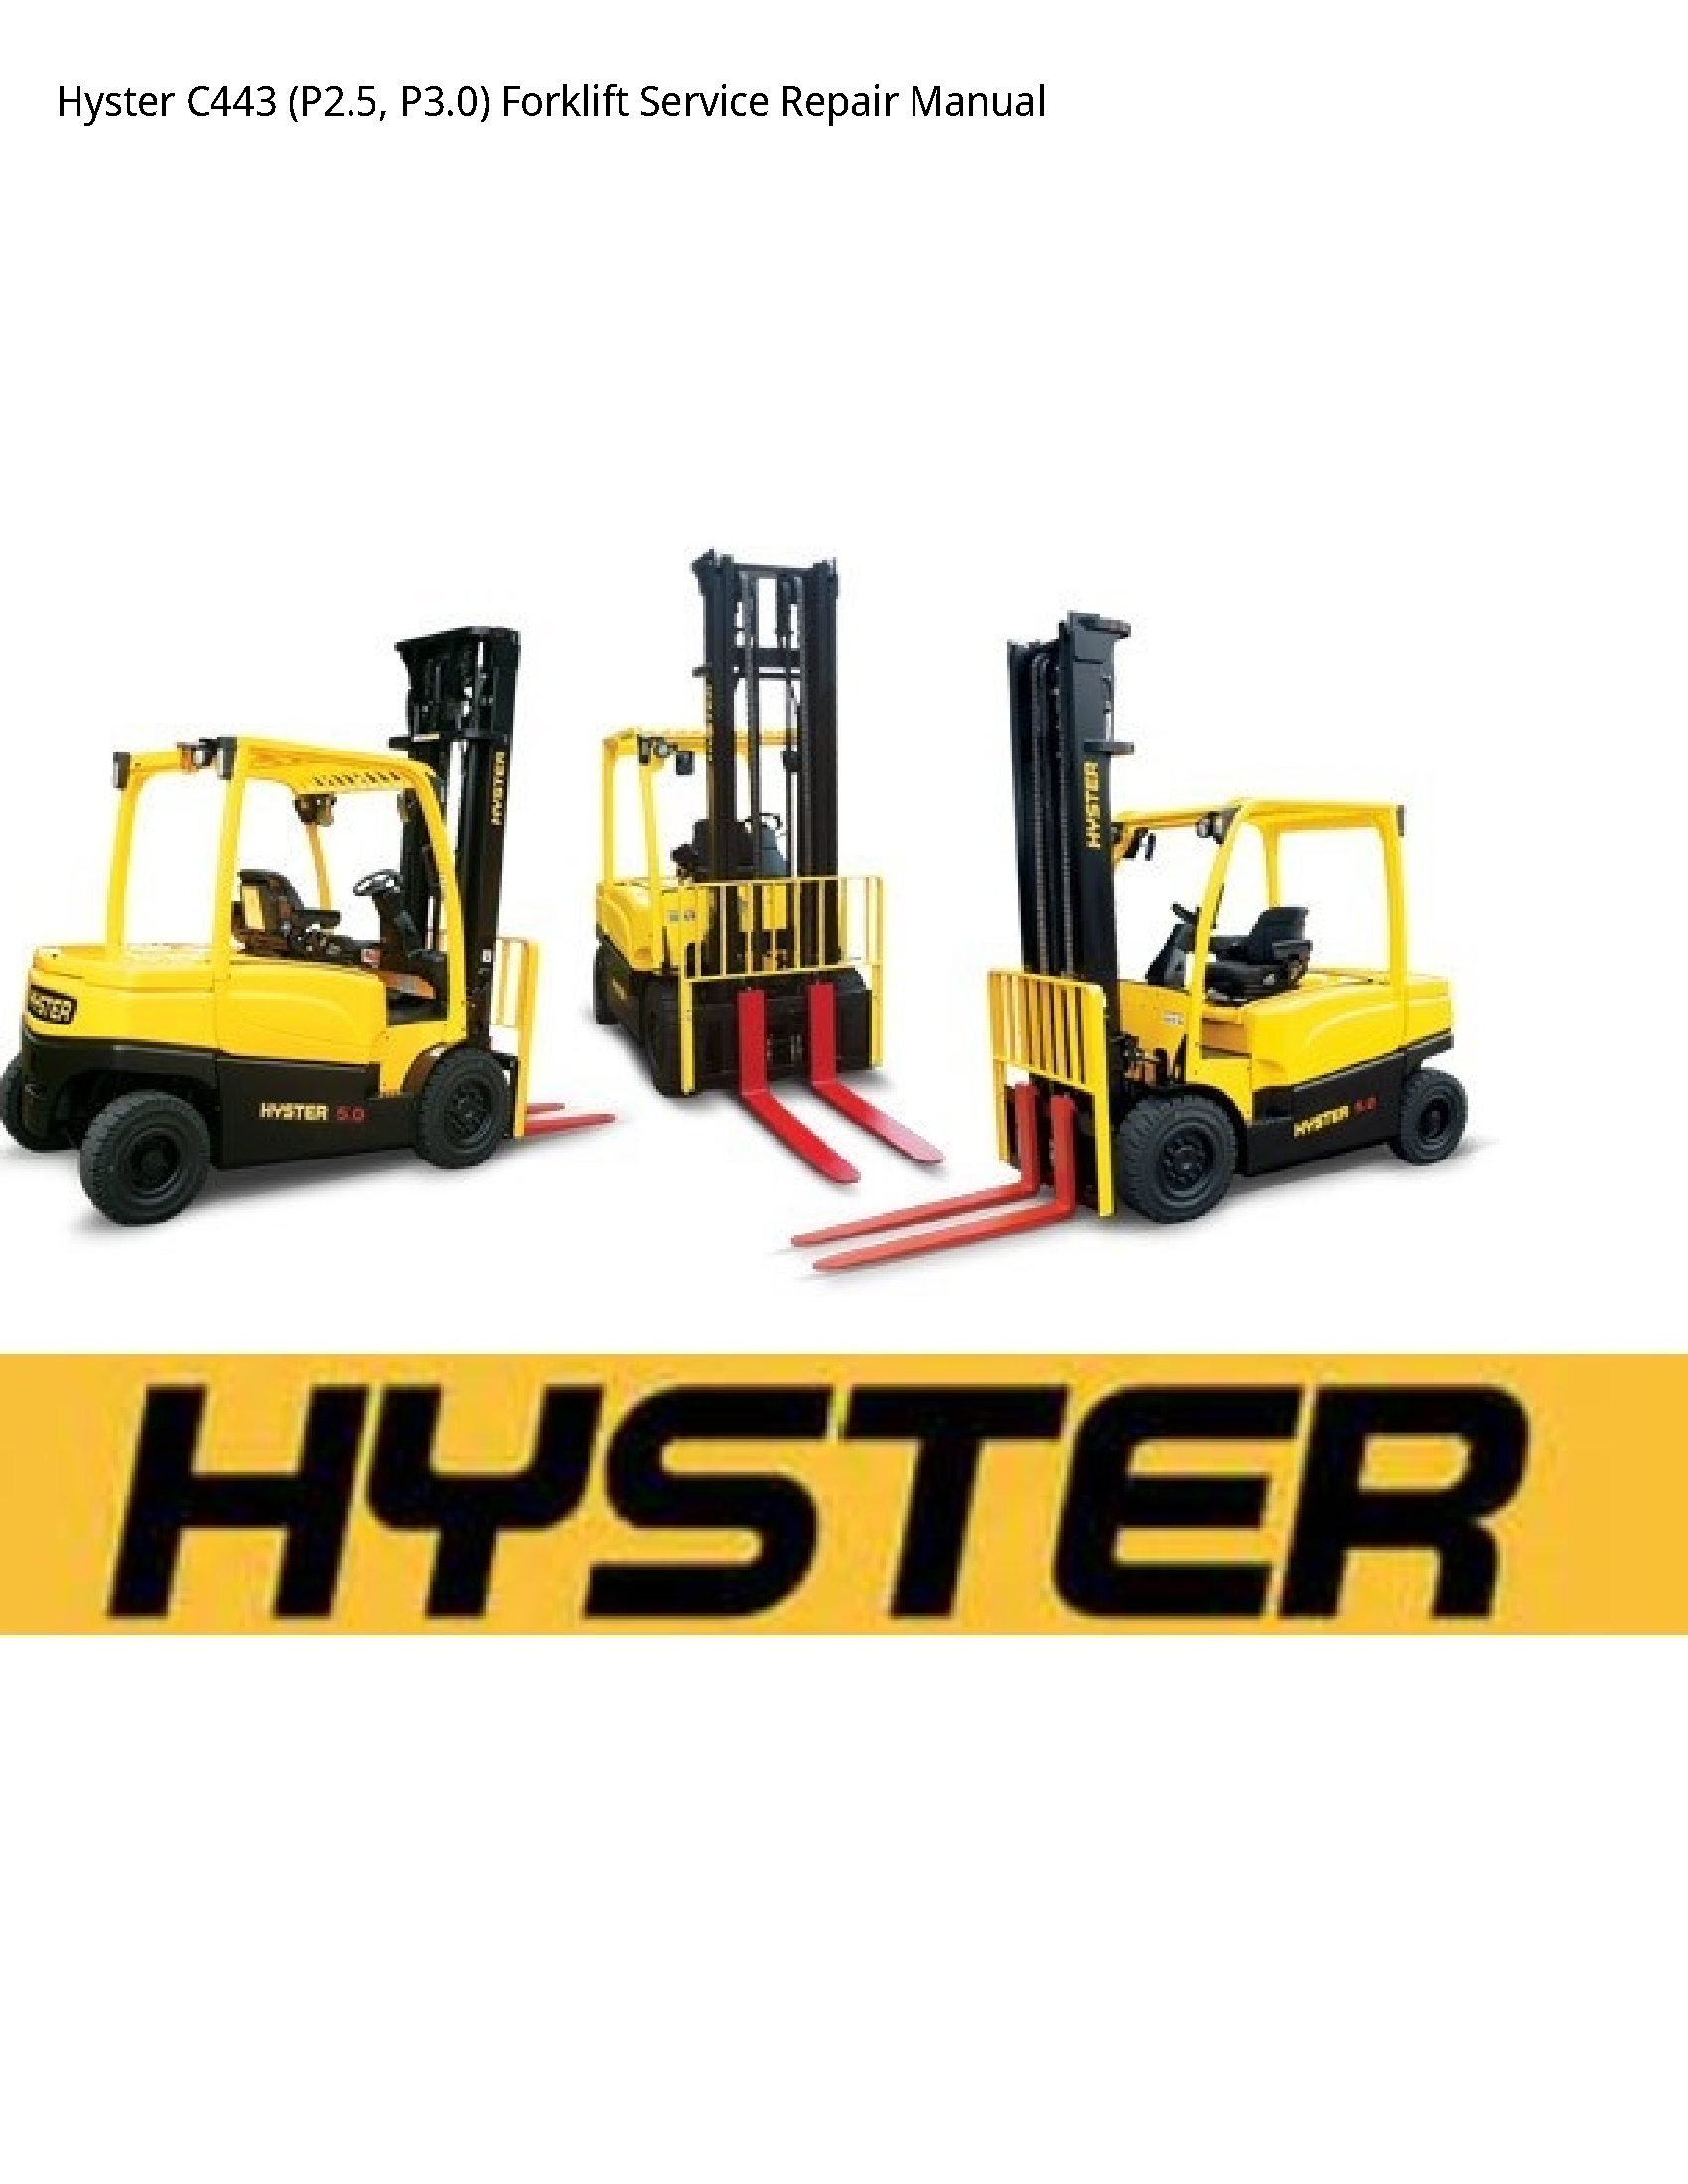 Hyster C443 Forklift manual